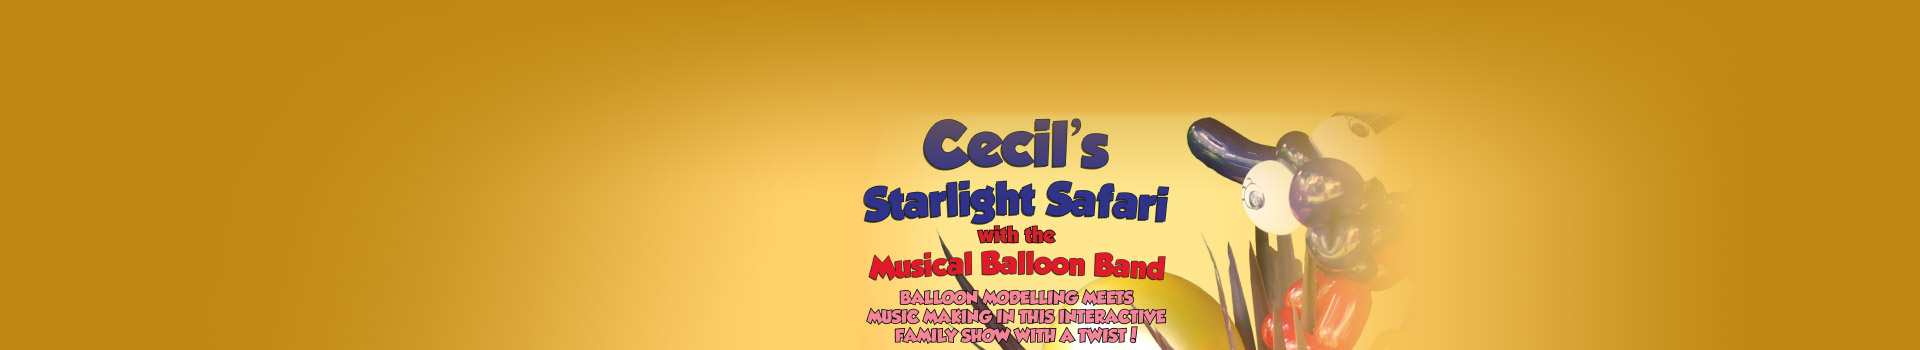 Cecil's Starlight Safari with The Musical Balloon Band